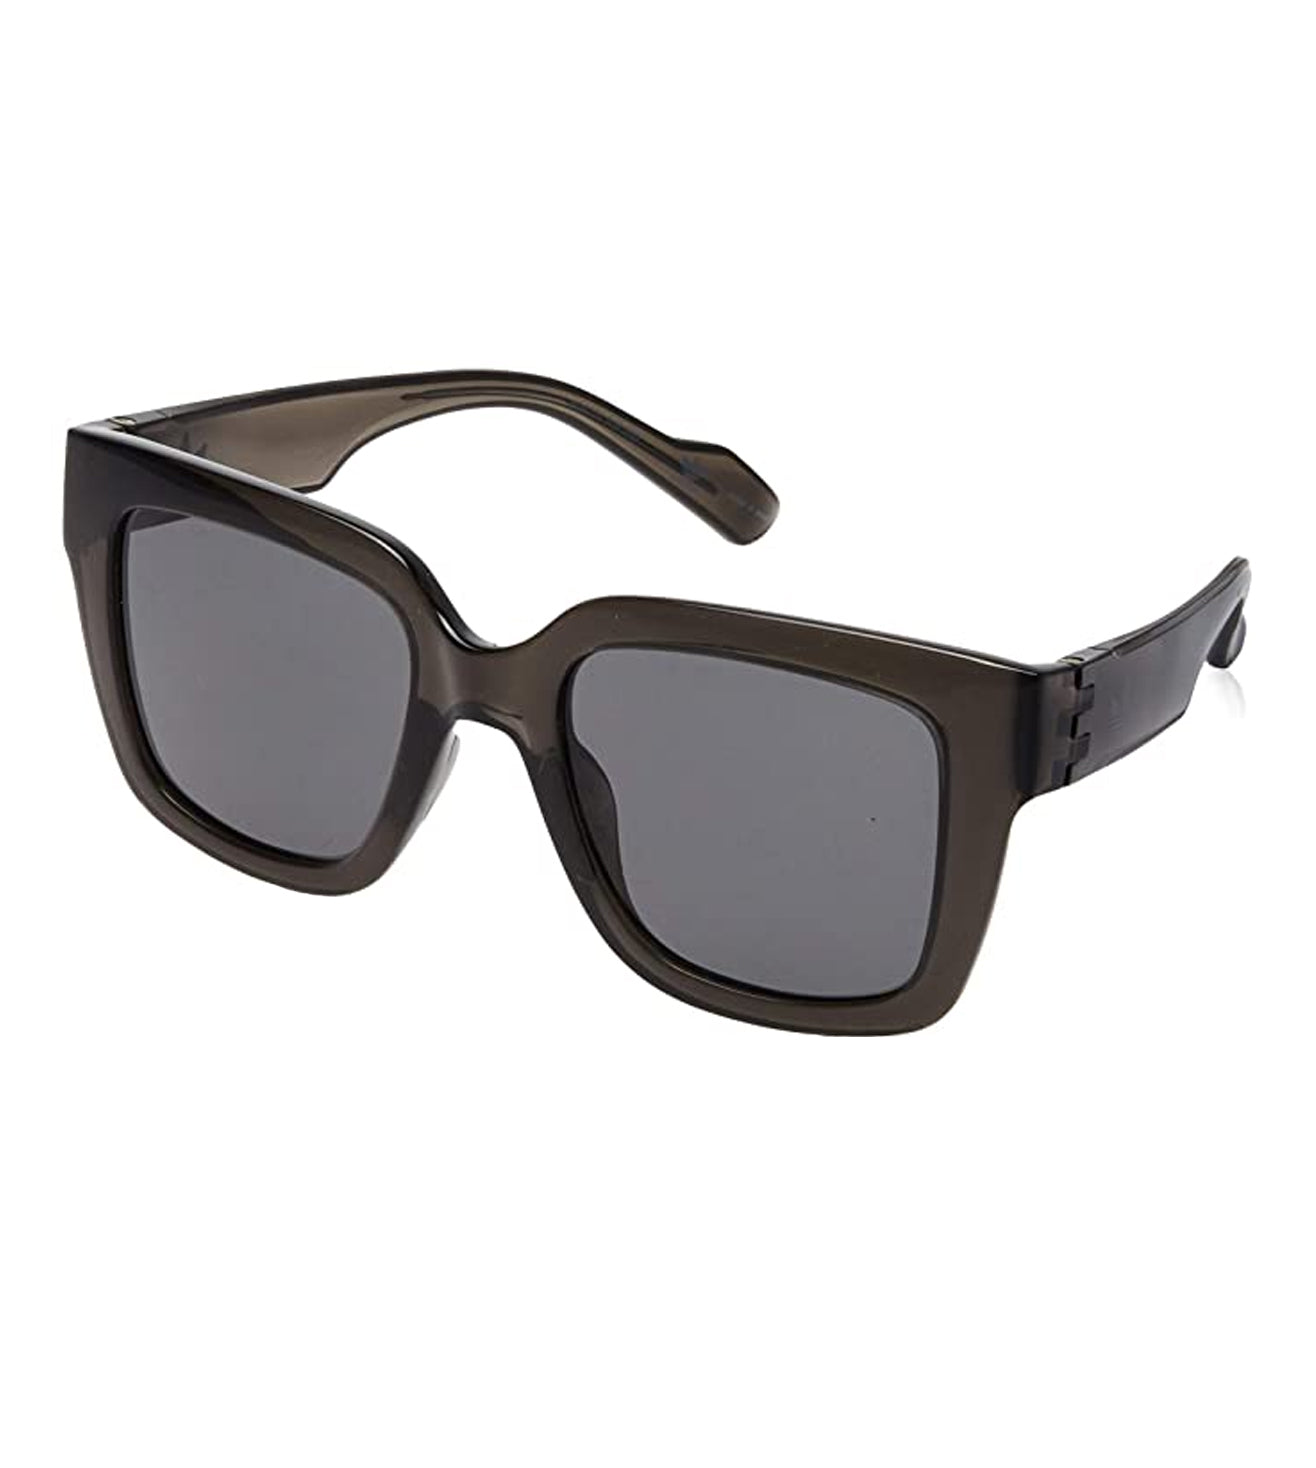 Adidas Originals Women's Grey Wayfarer Sunglasses